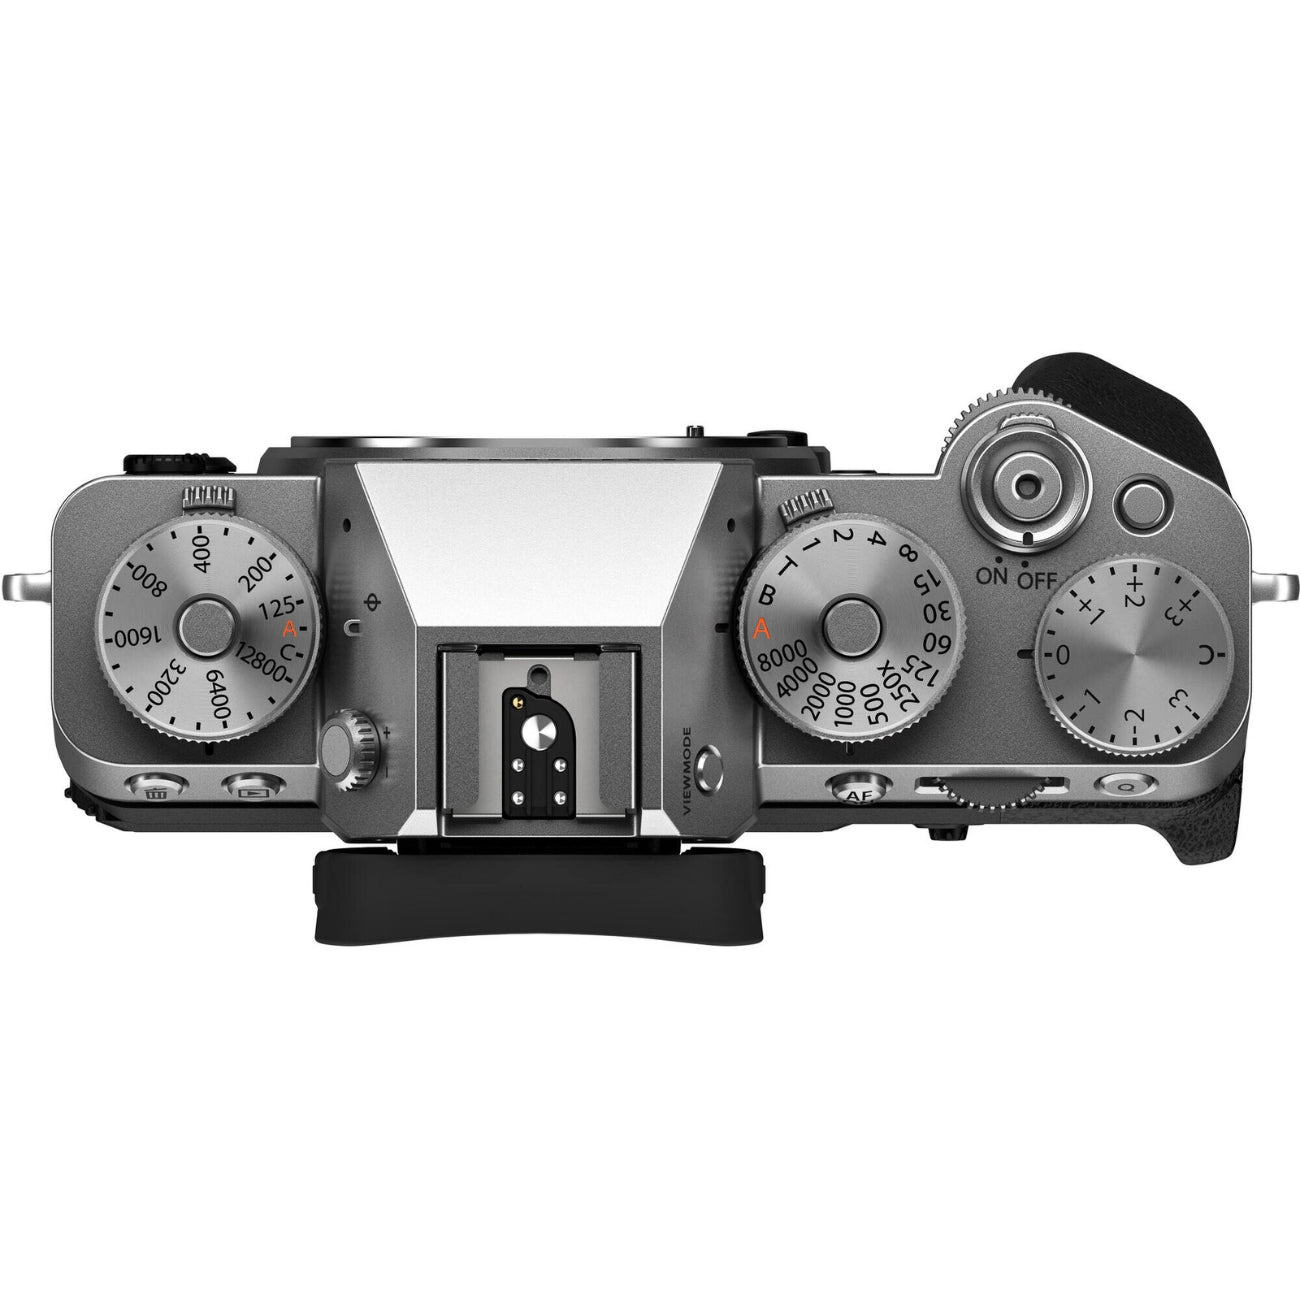 Fujifilm X-T5 Mirrorless Camera (Silver) - Top view